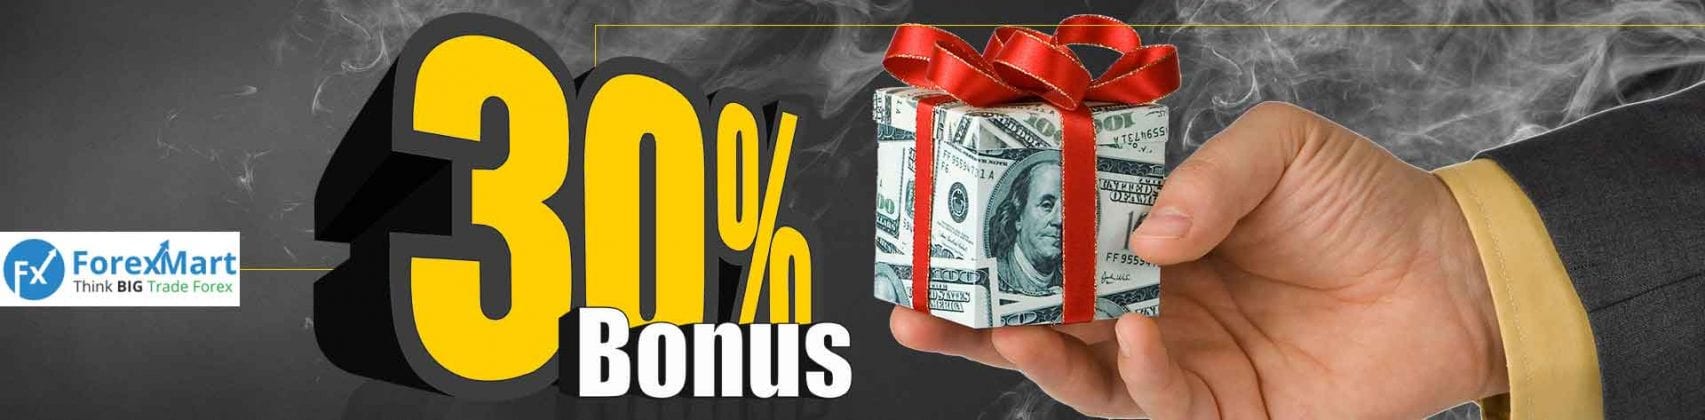 30 Deposit Bonus Promo ForexMart All Forex Bonus